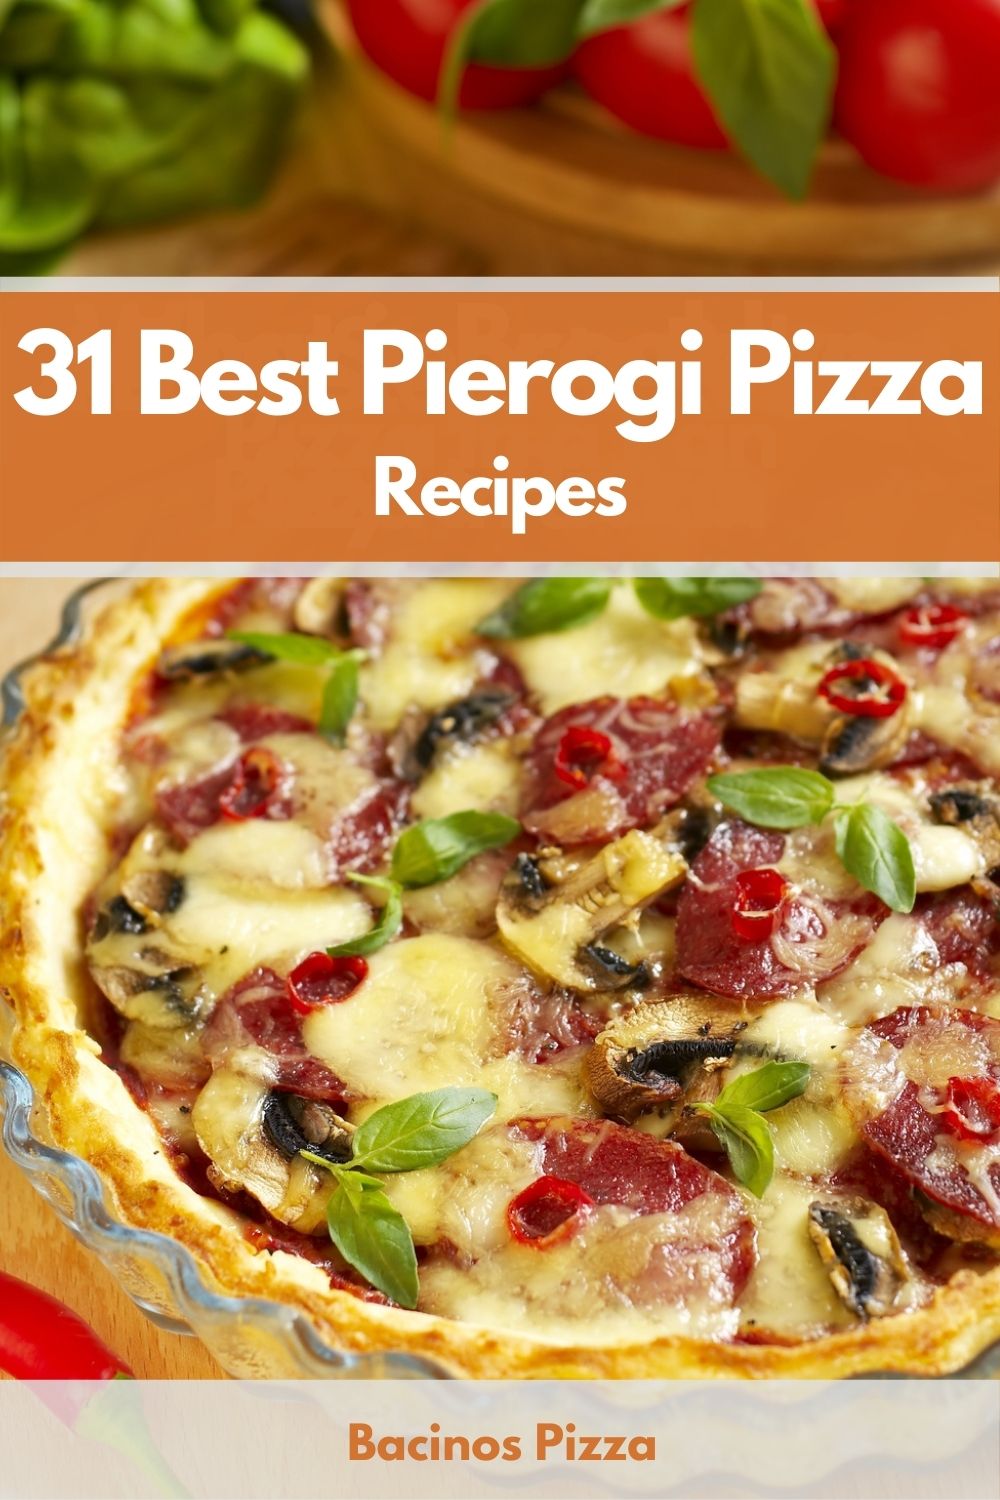 31 Best Pierogi Pizza Recipes pin